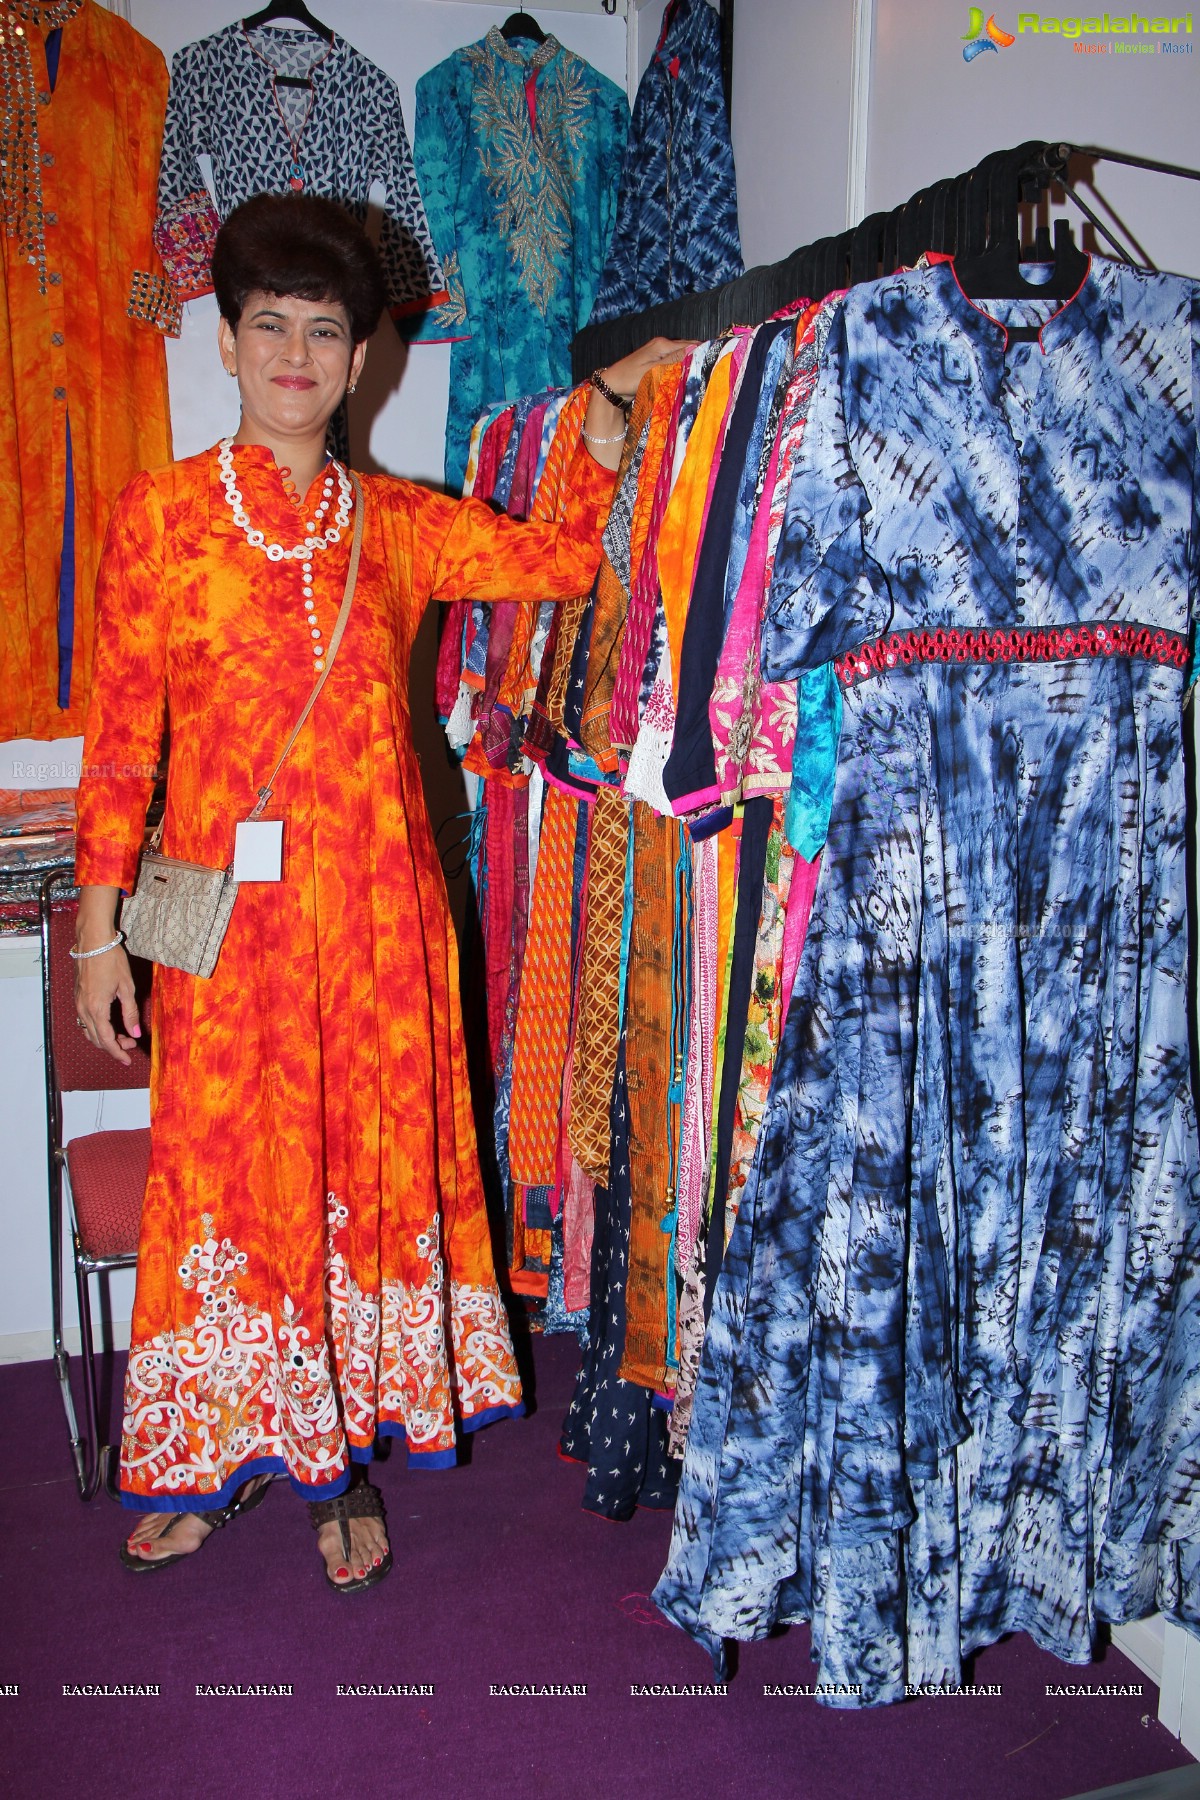 Angana Roy inaugurates Hi-Life Exhibition and Sale, Hyderabad